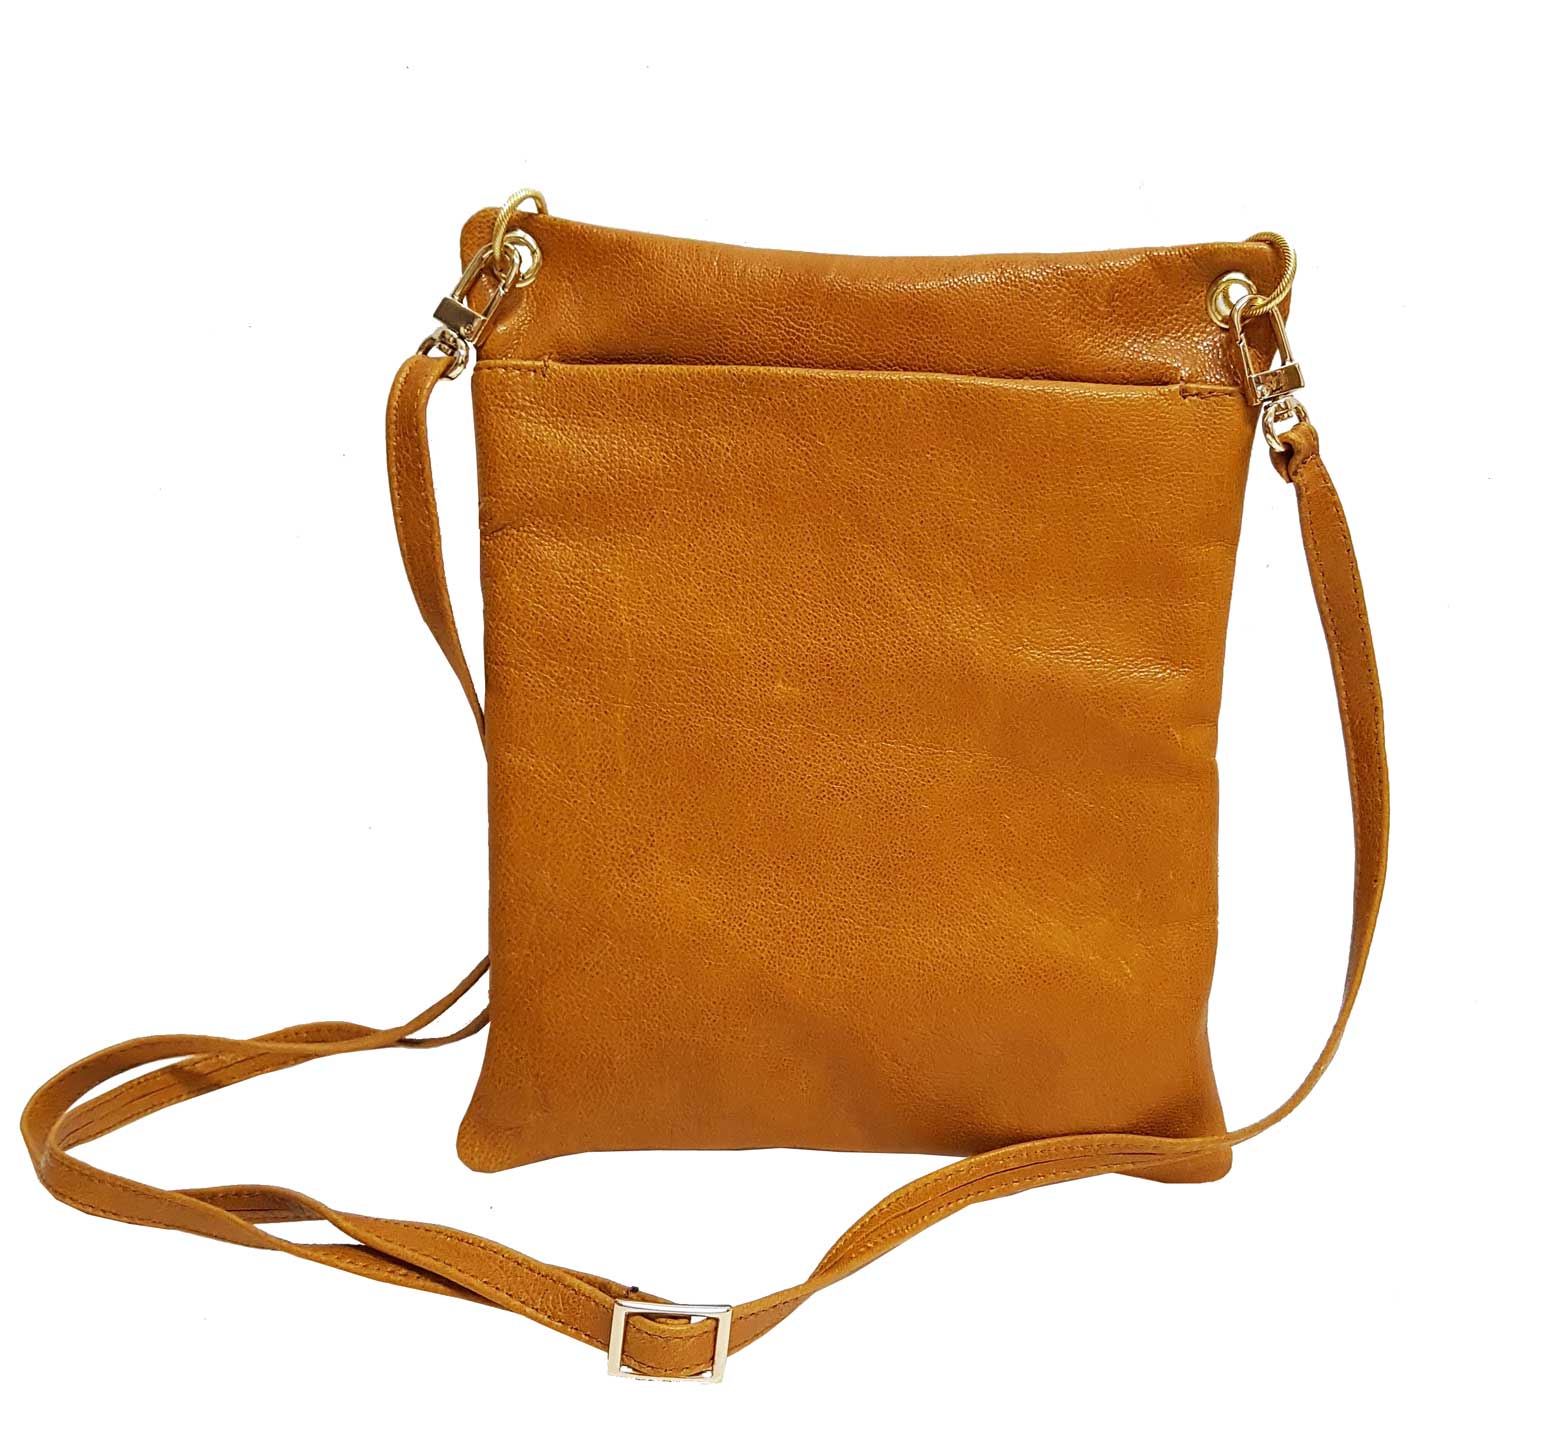 Camel Leather Mini Bag for Daytime, Evening, Travel